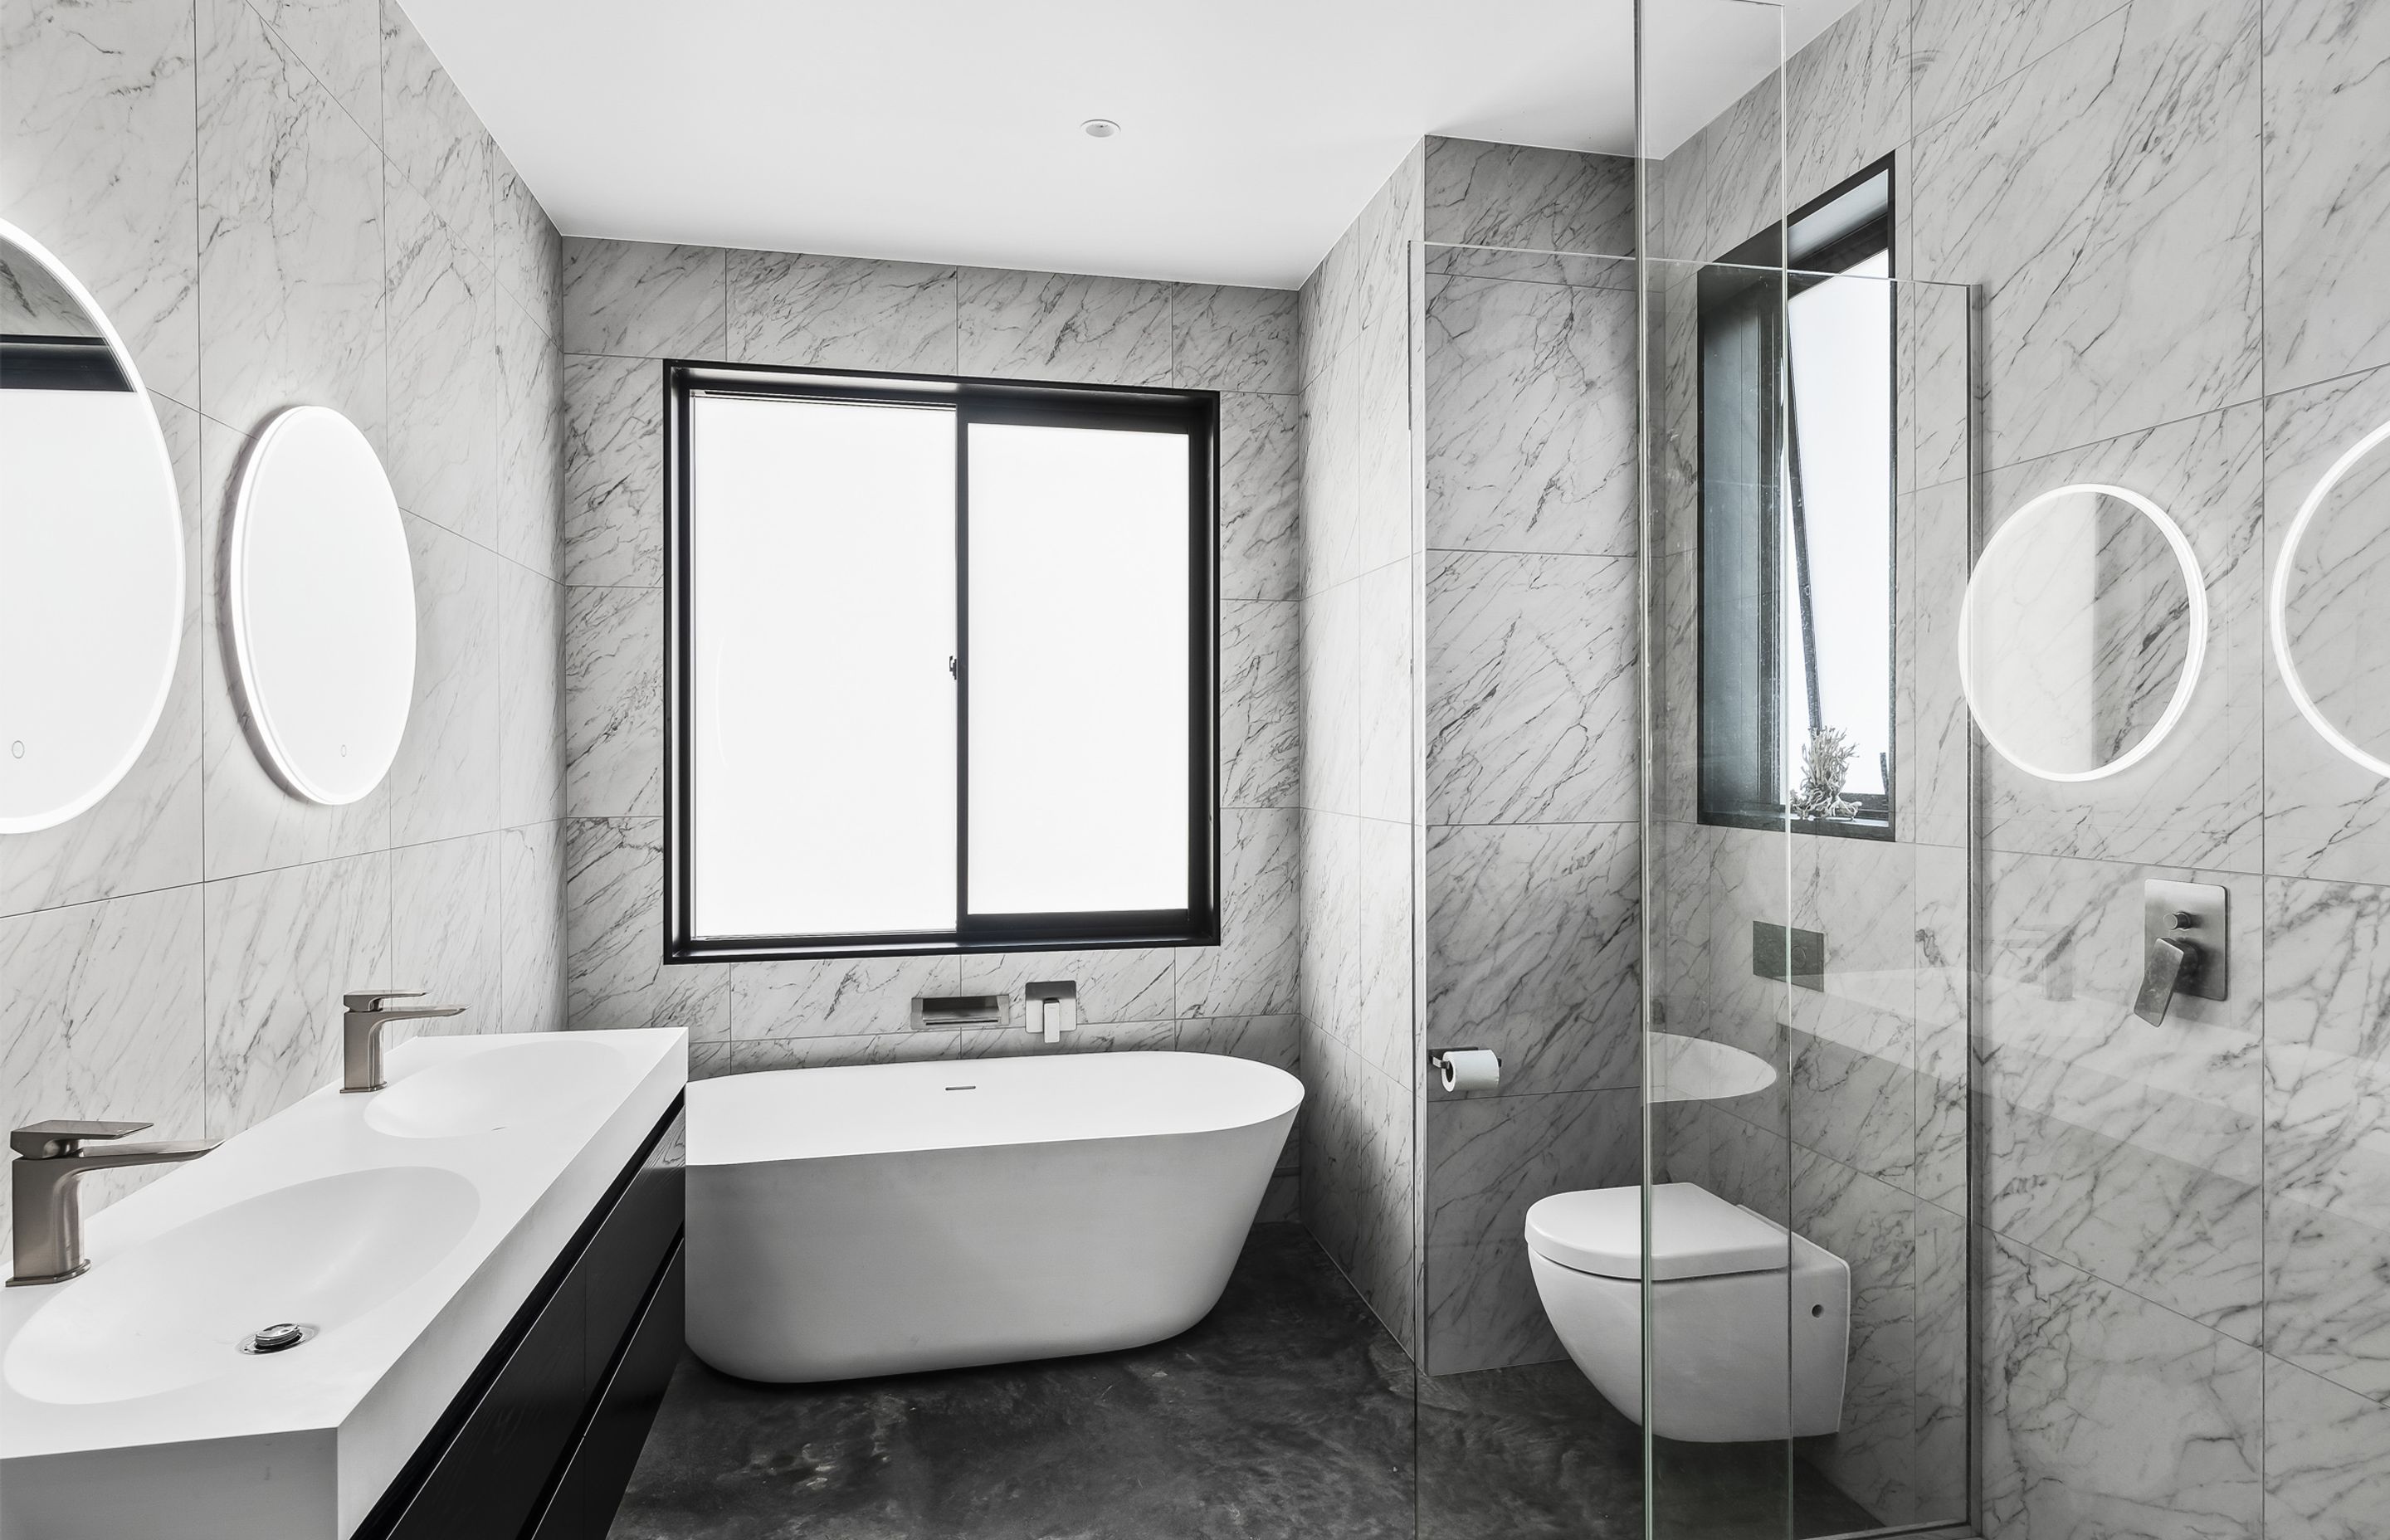 Carrara silver matt tiles and the freestanding bath is Progetto Niagara Ellipse from Plumbline.